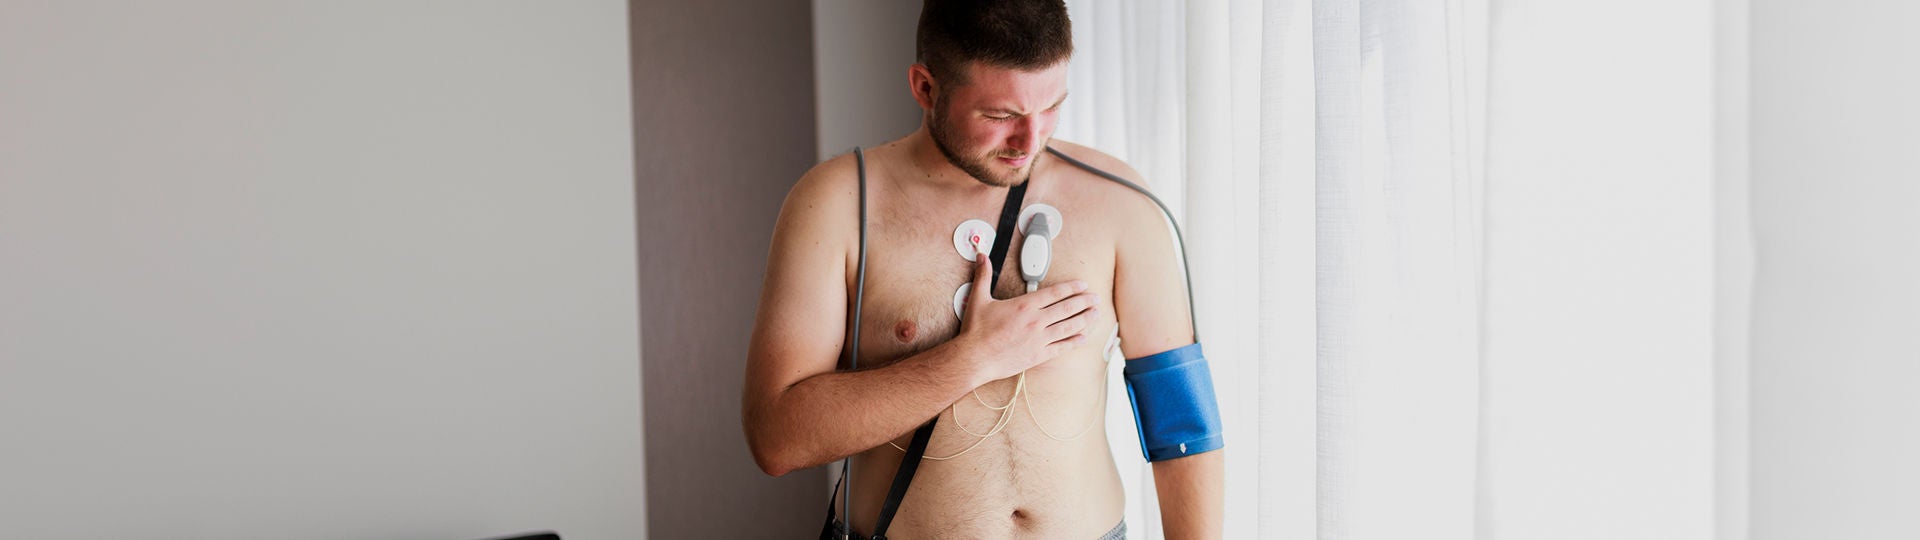 Männer leiden häufiger an Herzkrankheiten.